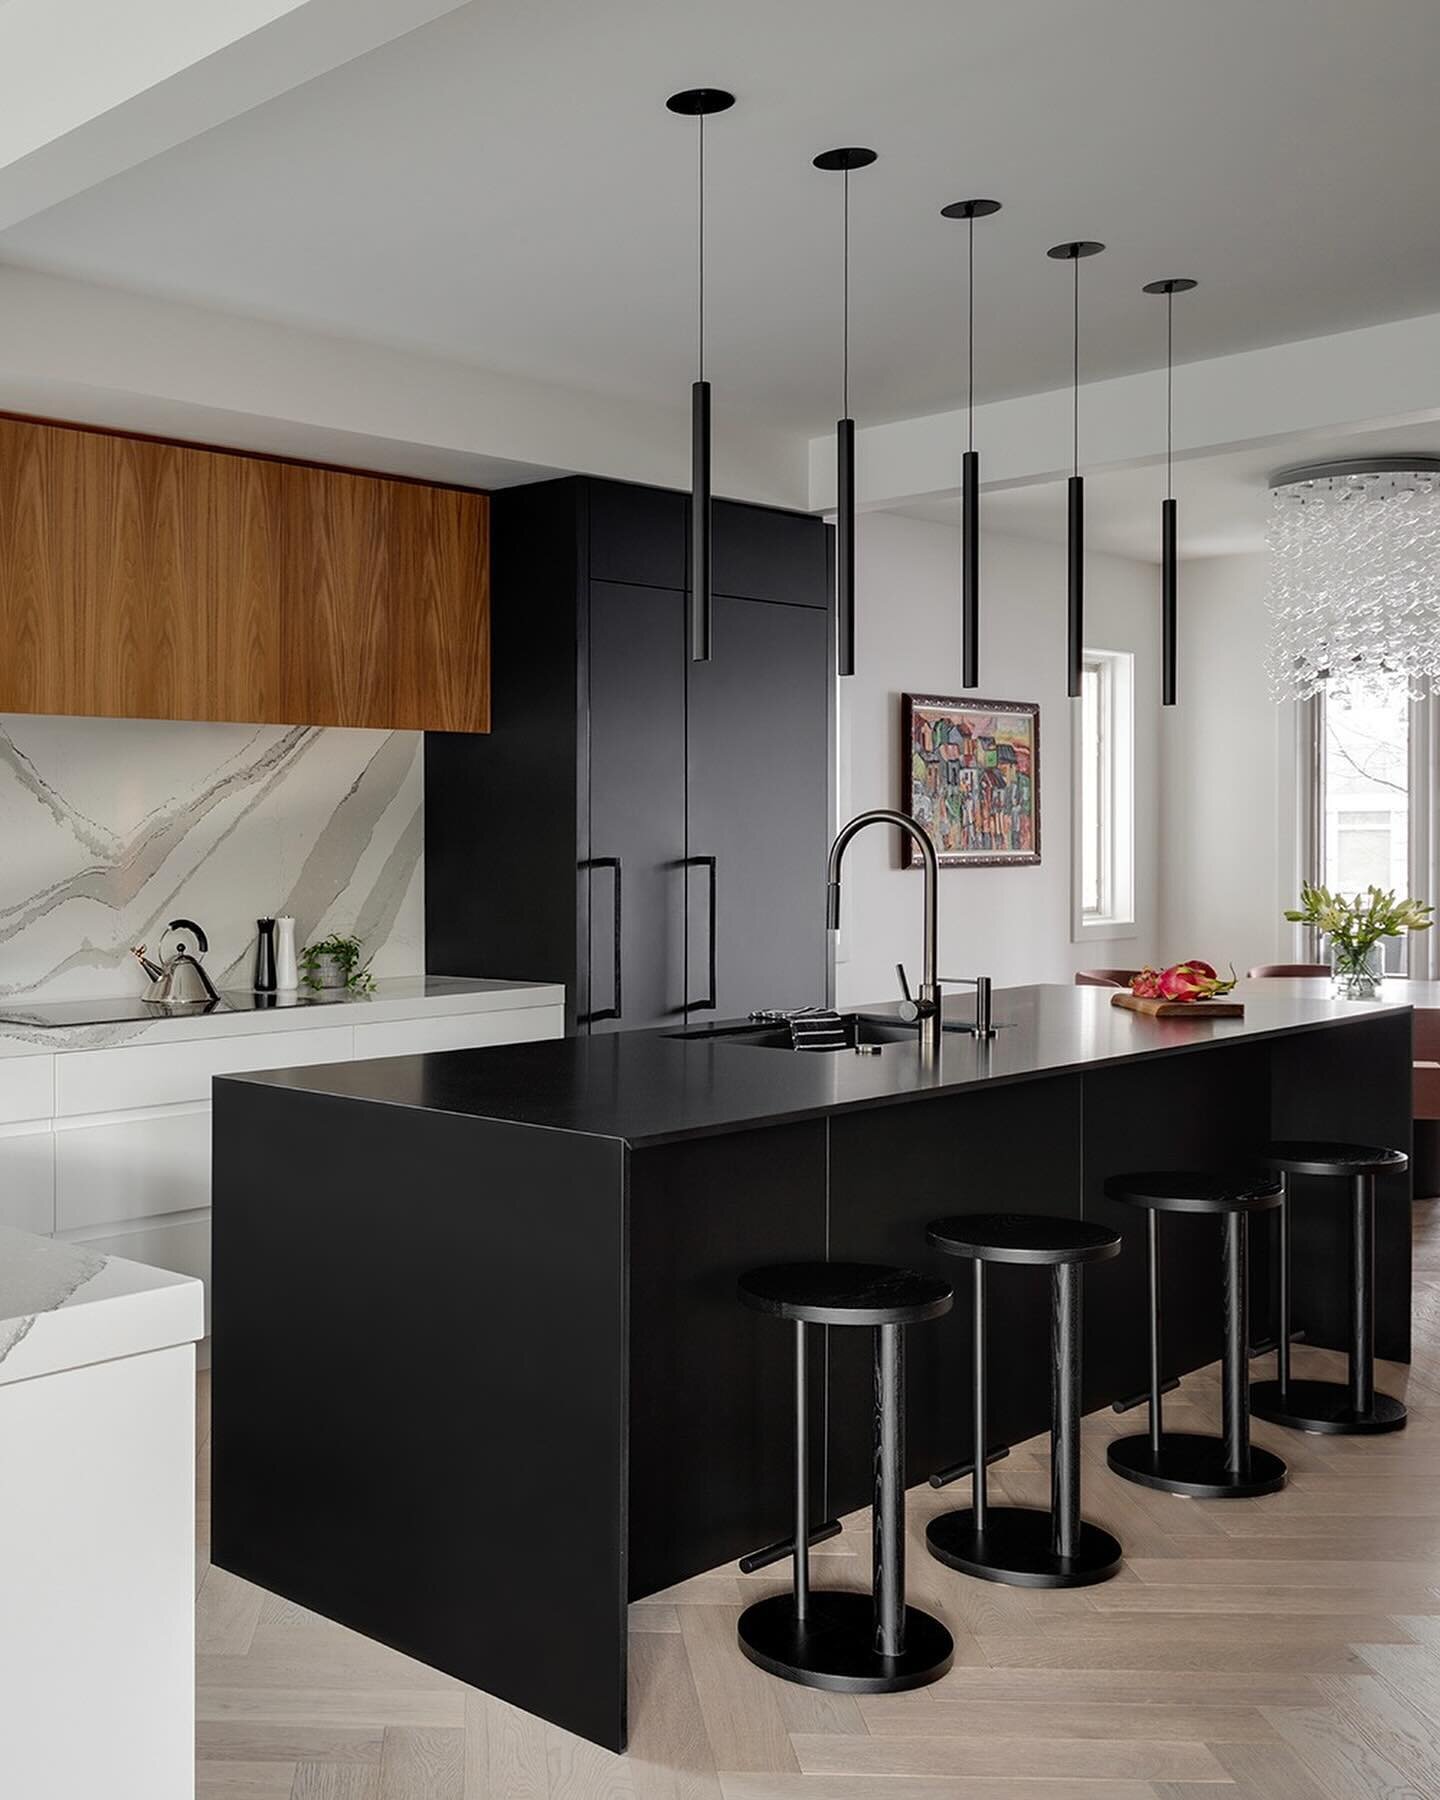 Beautiful, bold and minimalistic kitchen designed by @loopinteriordesign 😍
.
.
#CalgaryPhotographer #CalgaryInteriorPhotographer #CalgaryInteriorDesignPhotographer  #CalgaryHomeBuilderPhotographer #CalgaryRealEstatePhotographer #Calgary #Photographe